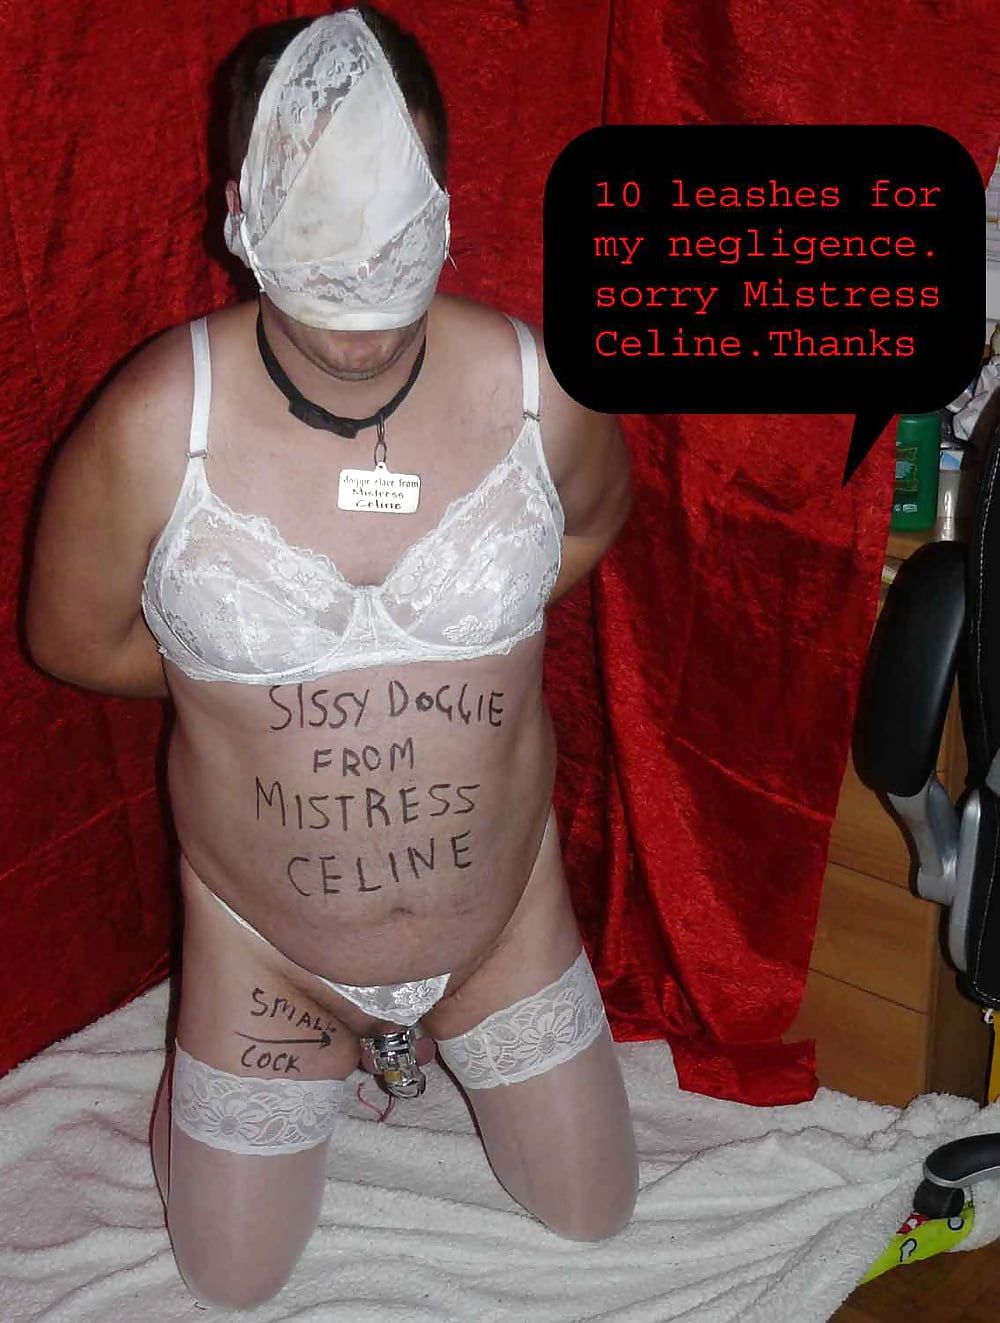 punished for my negligence. Thanks Mistress Celine #2